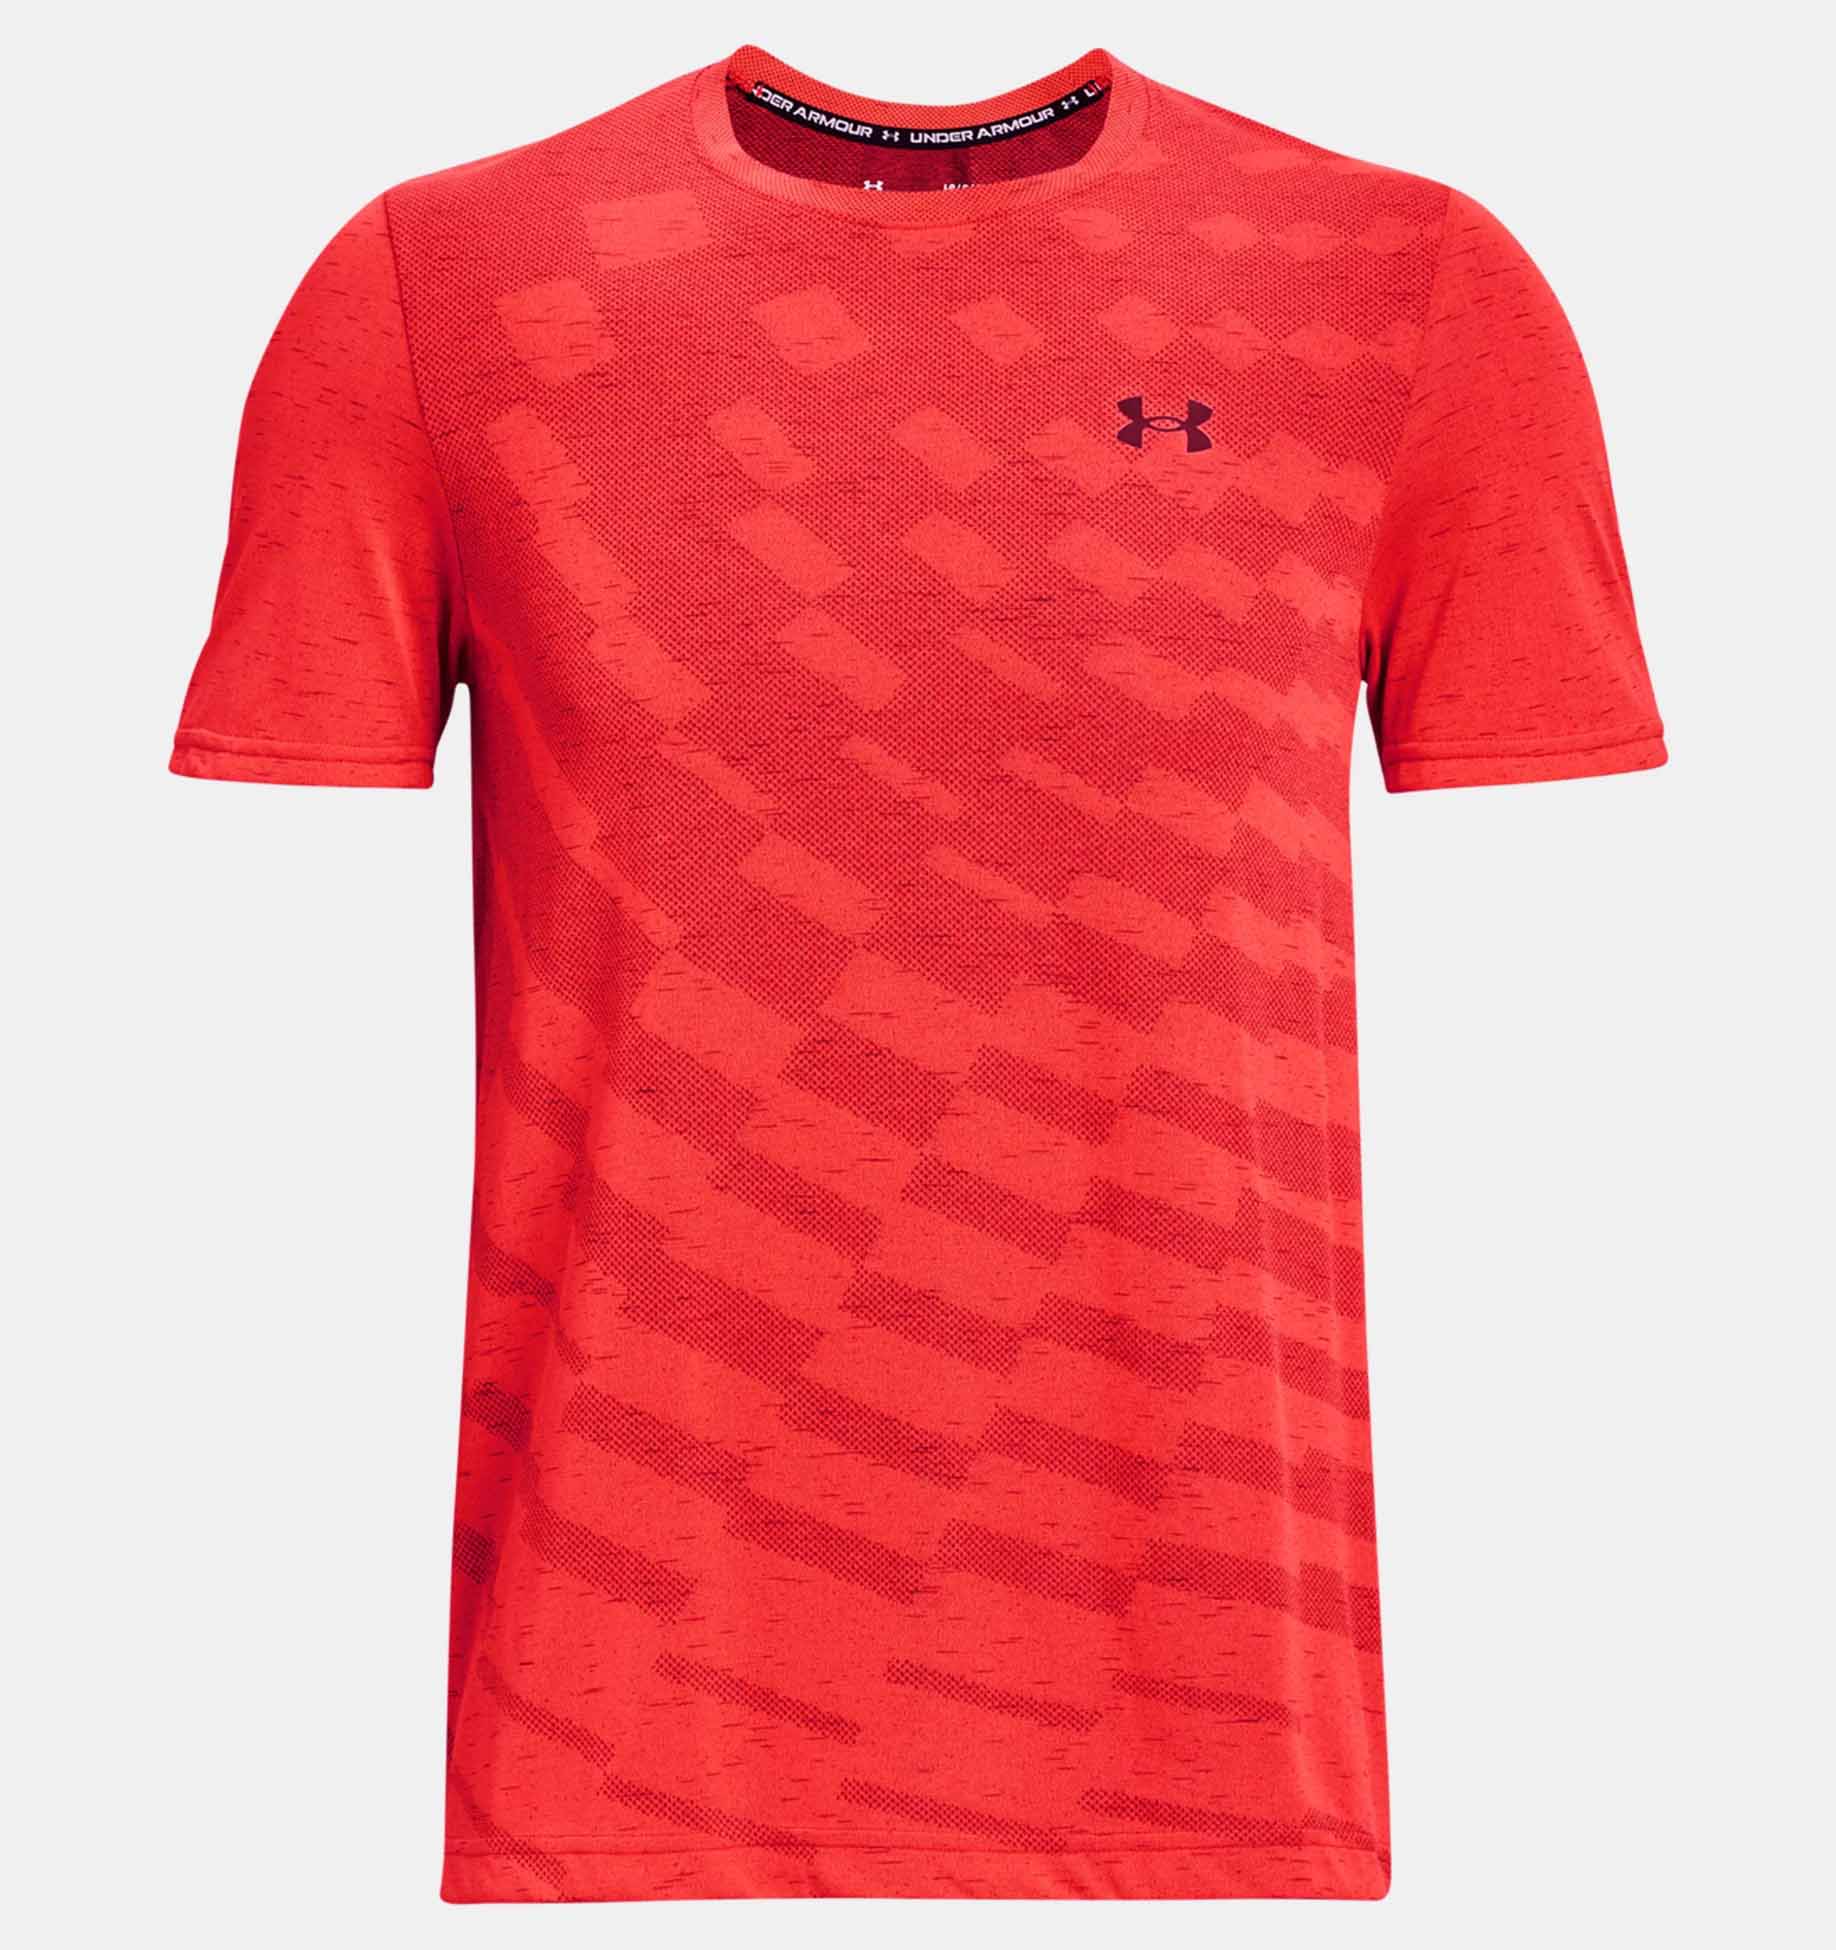 UA Seamless Radial short sleeve shirt